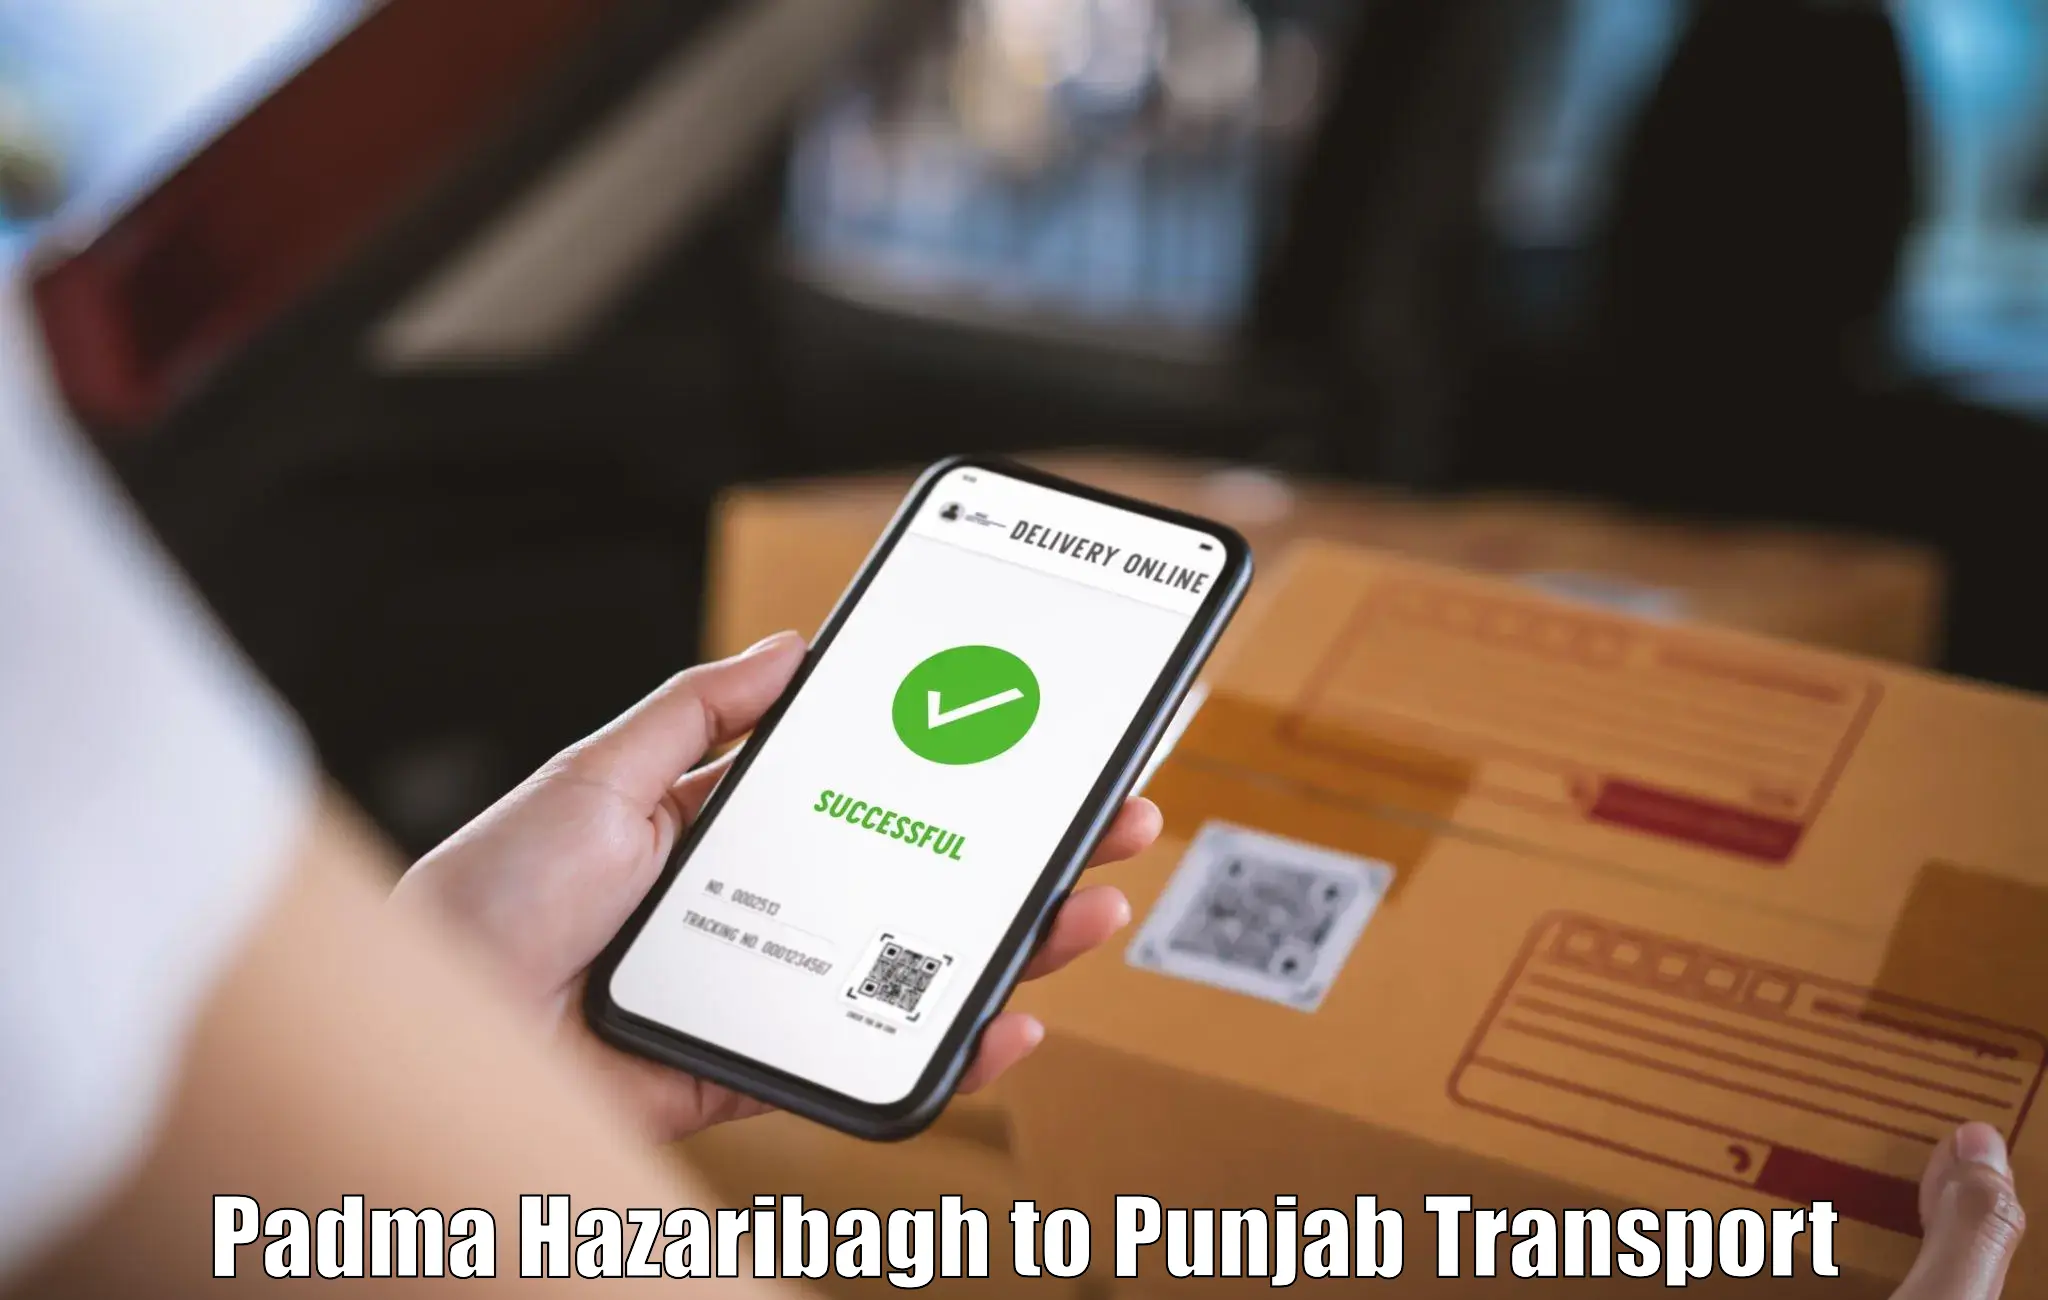 Nearby transport service Padma Hazaribagh to Goindwal Sahib